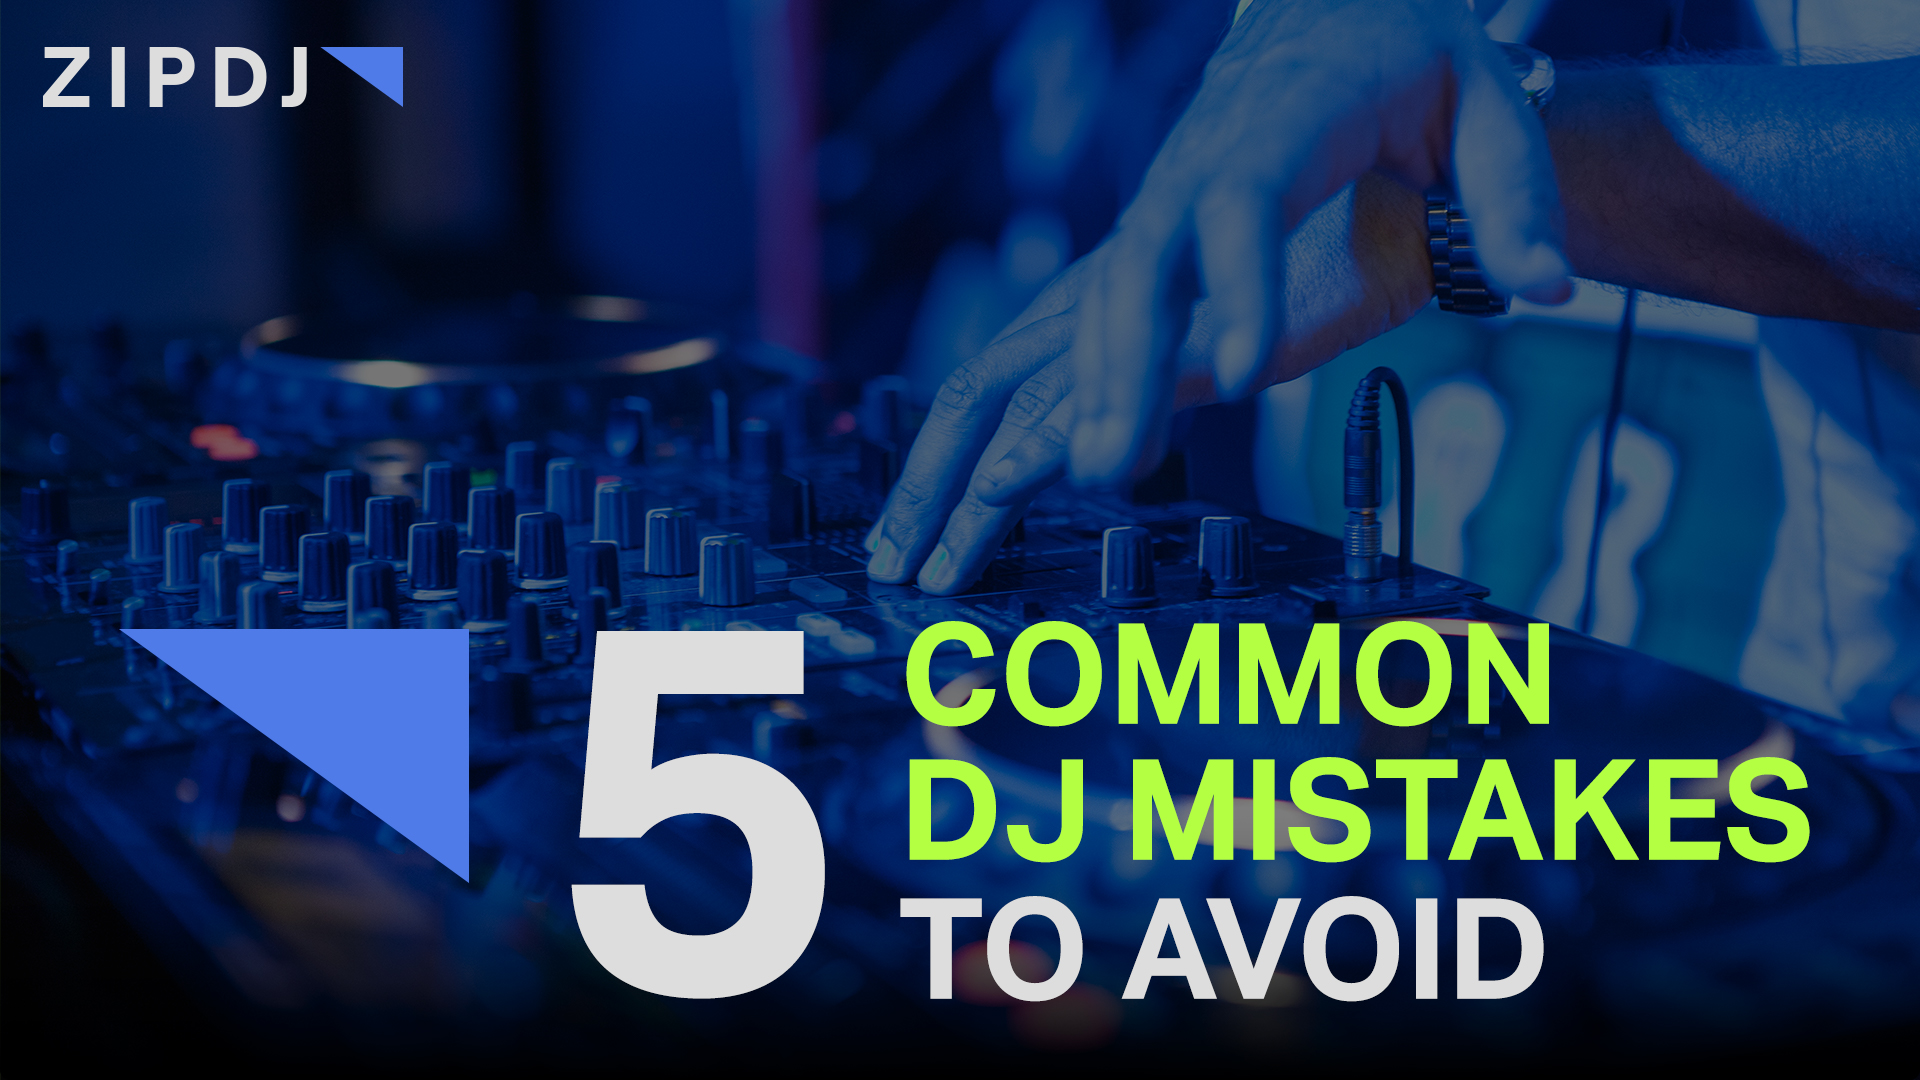 5 Common DJ Mistakes to Avoid